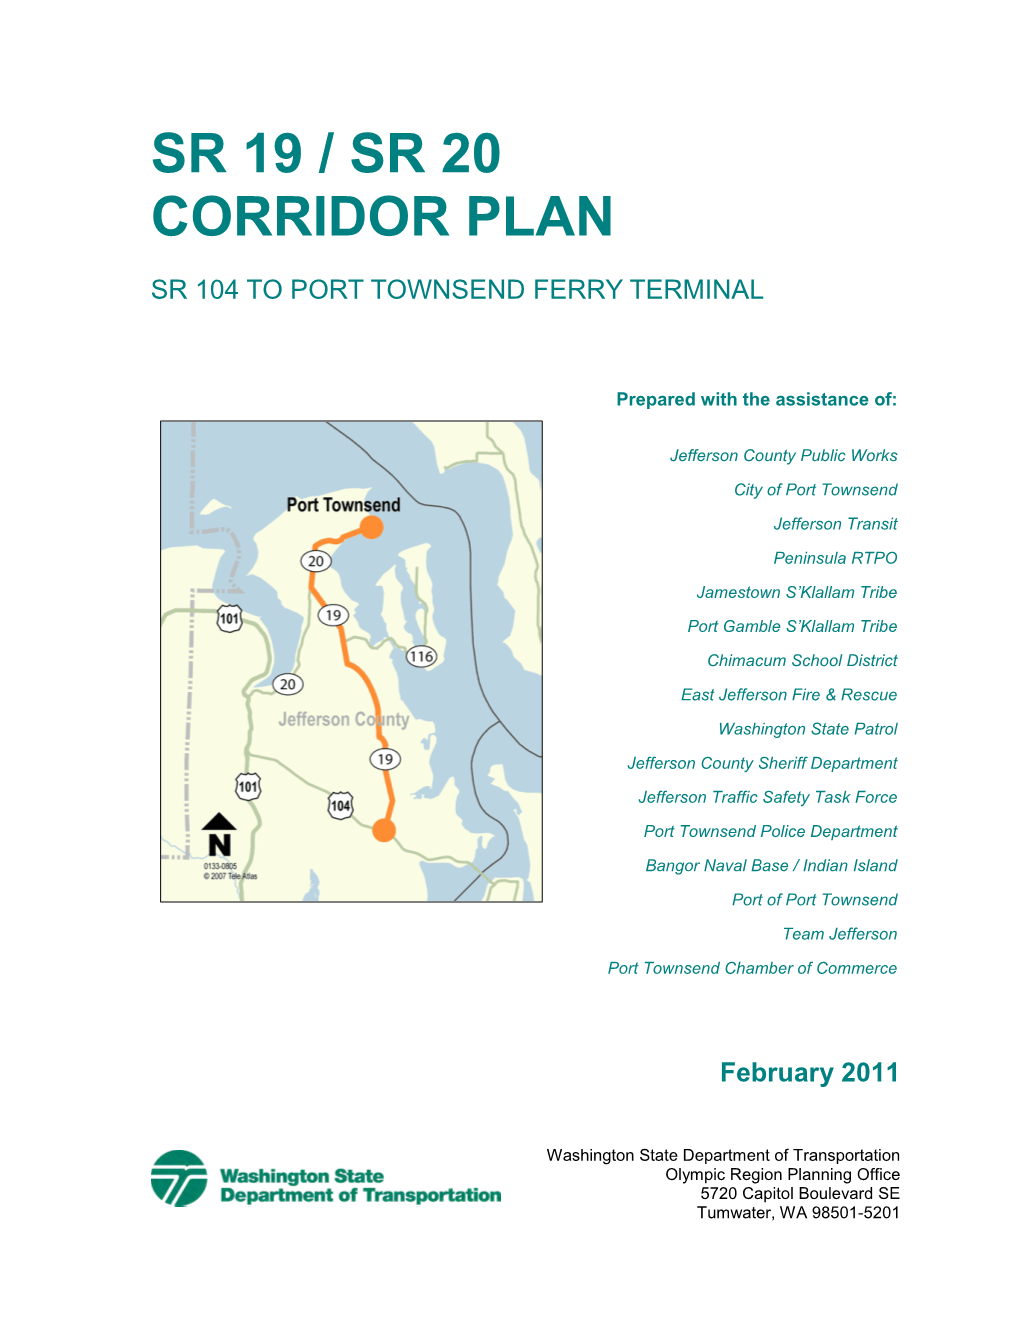 SR 19/20 Corridor Plan